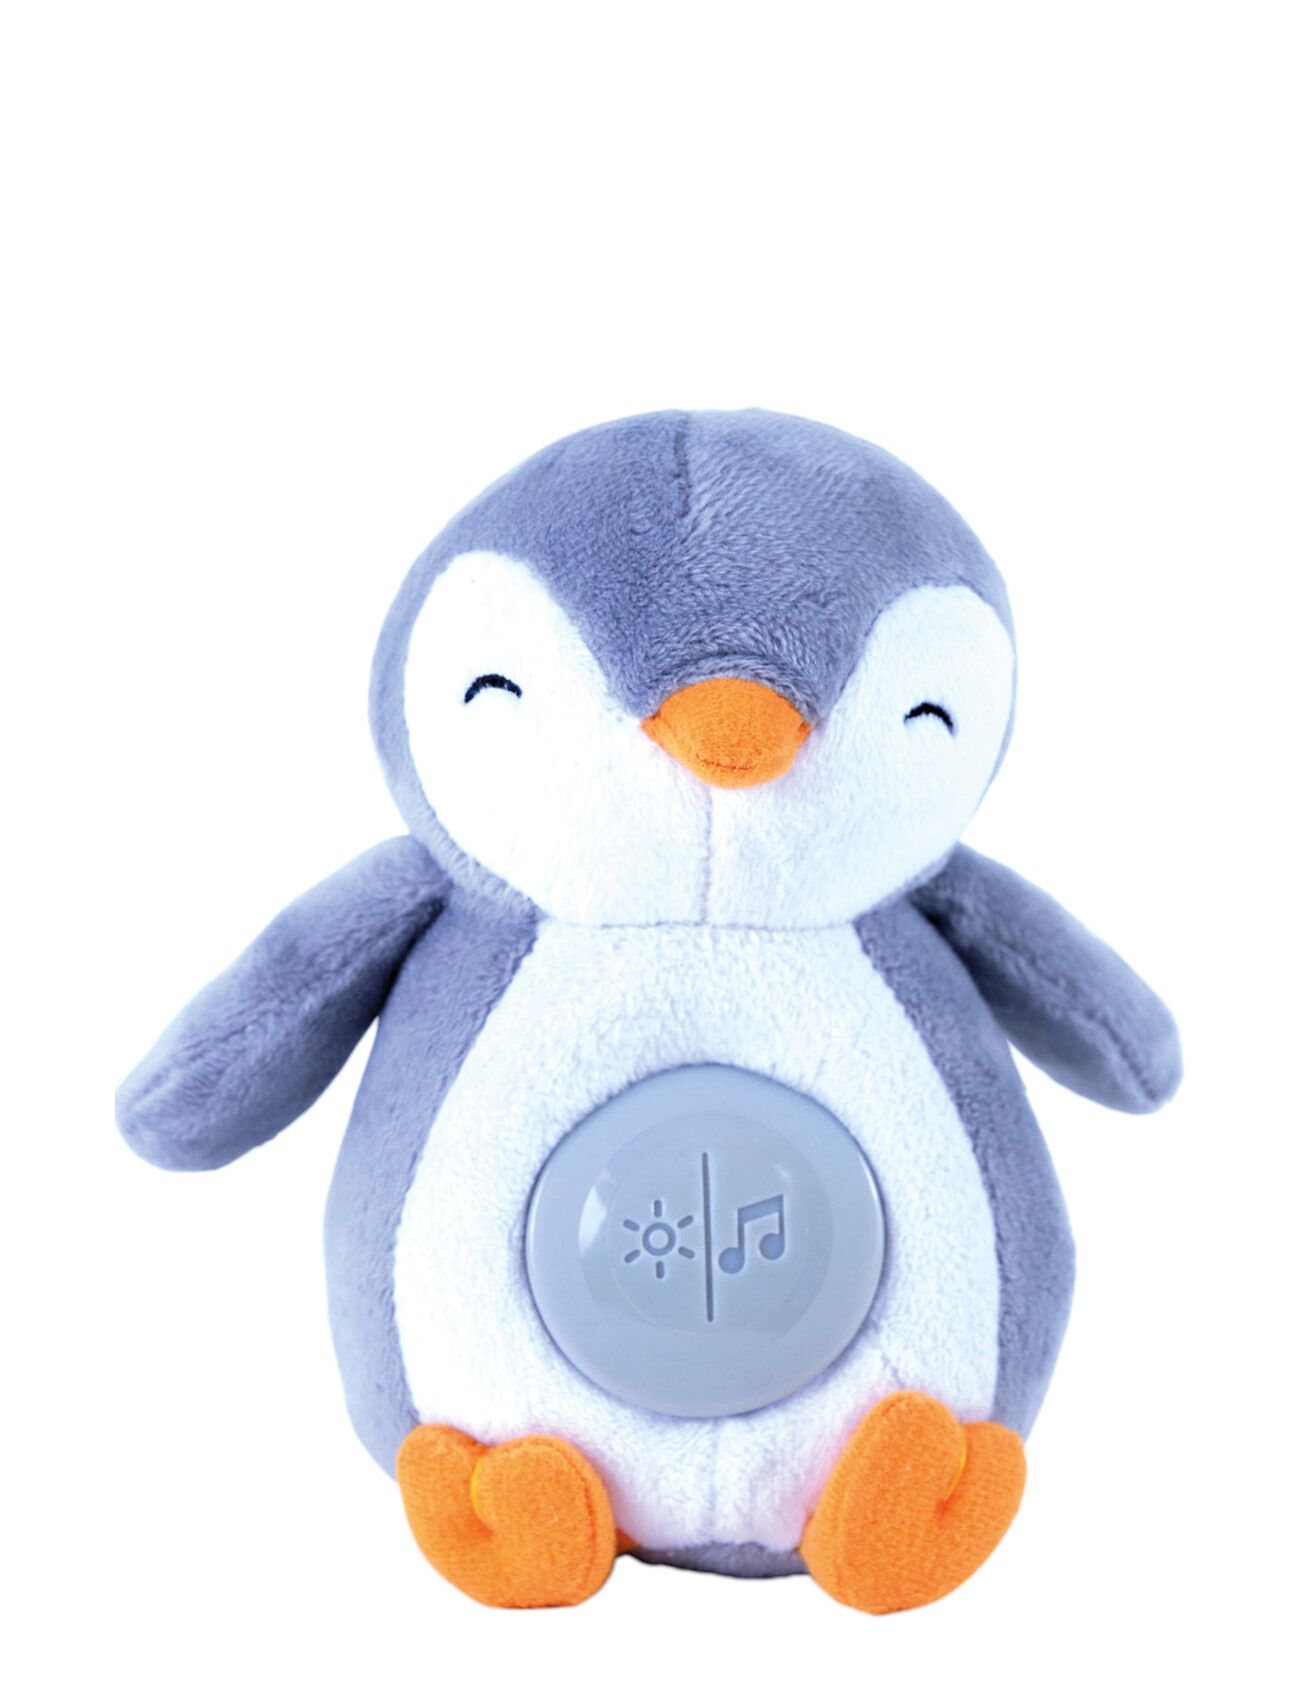 Slumber Buddies - Penguin Toys Baby Toys Musical Plush Toys Multi/patterned Sumr